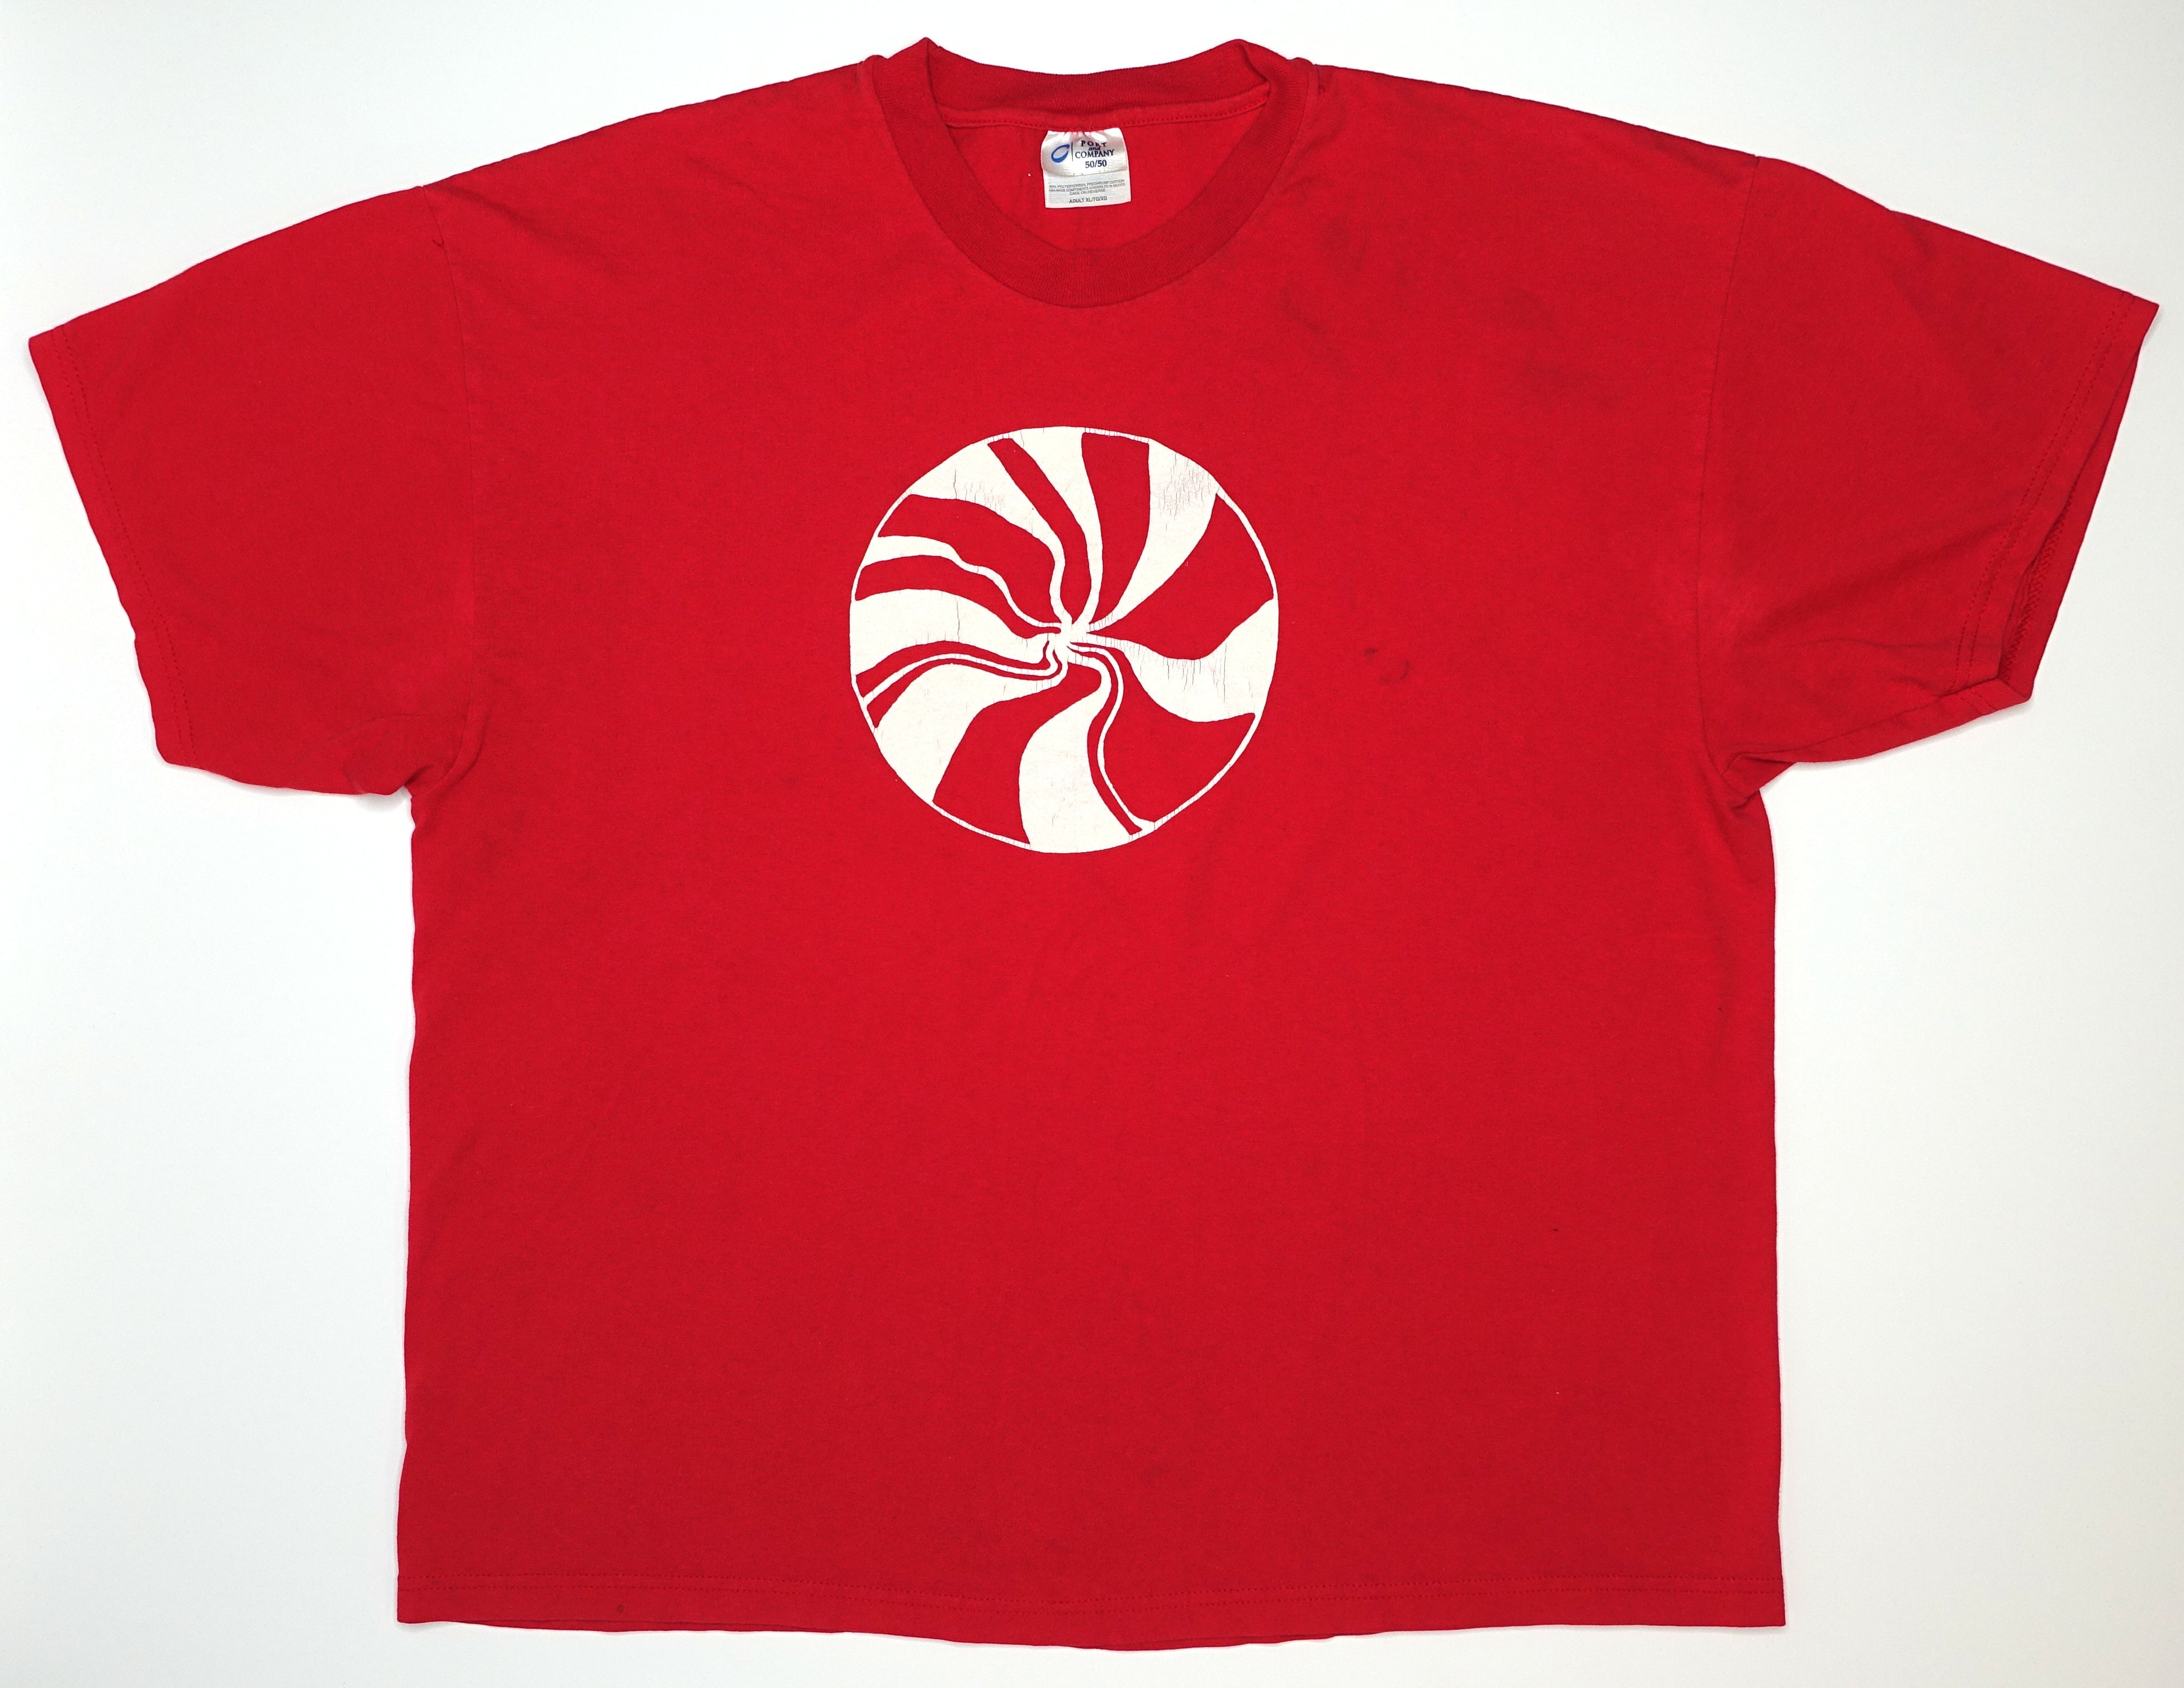 the White Stripes – Nobody Knows How To Talk To Children / White Blood Cells 2001 Tour Shirt Size XL